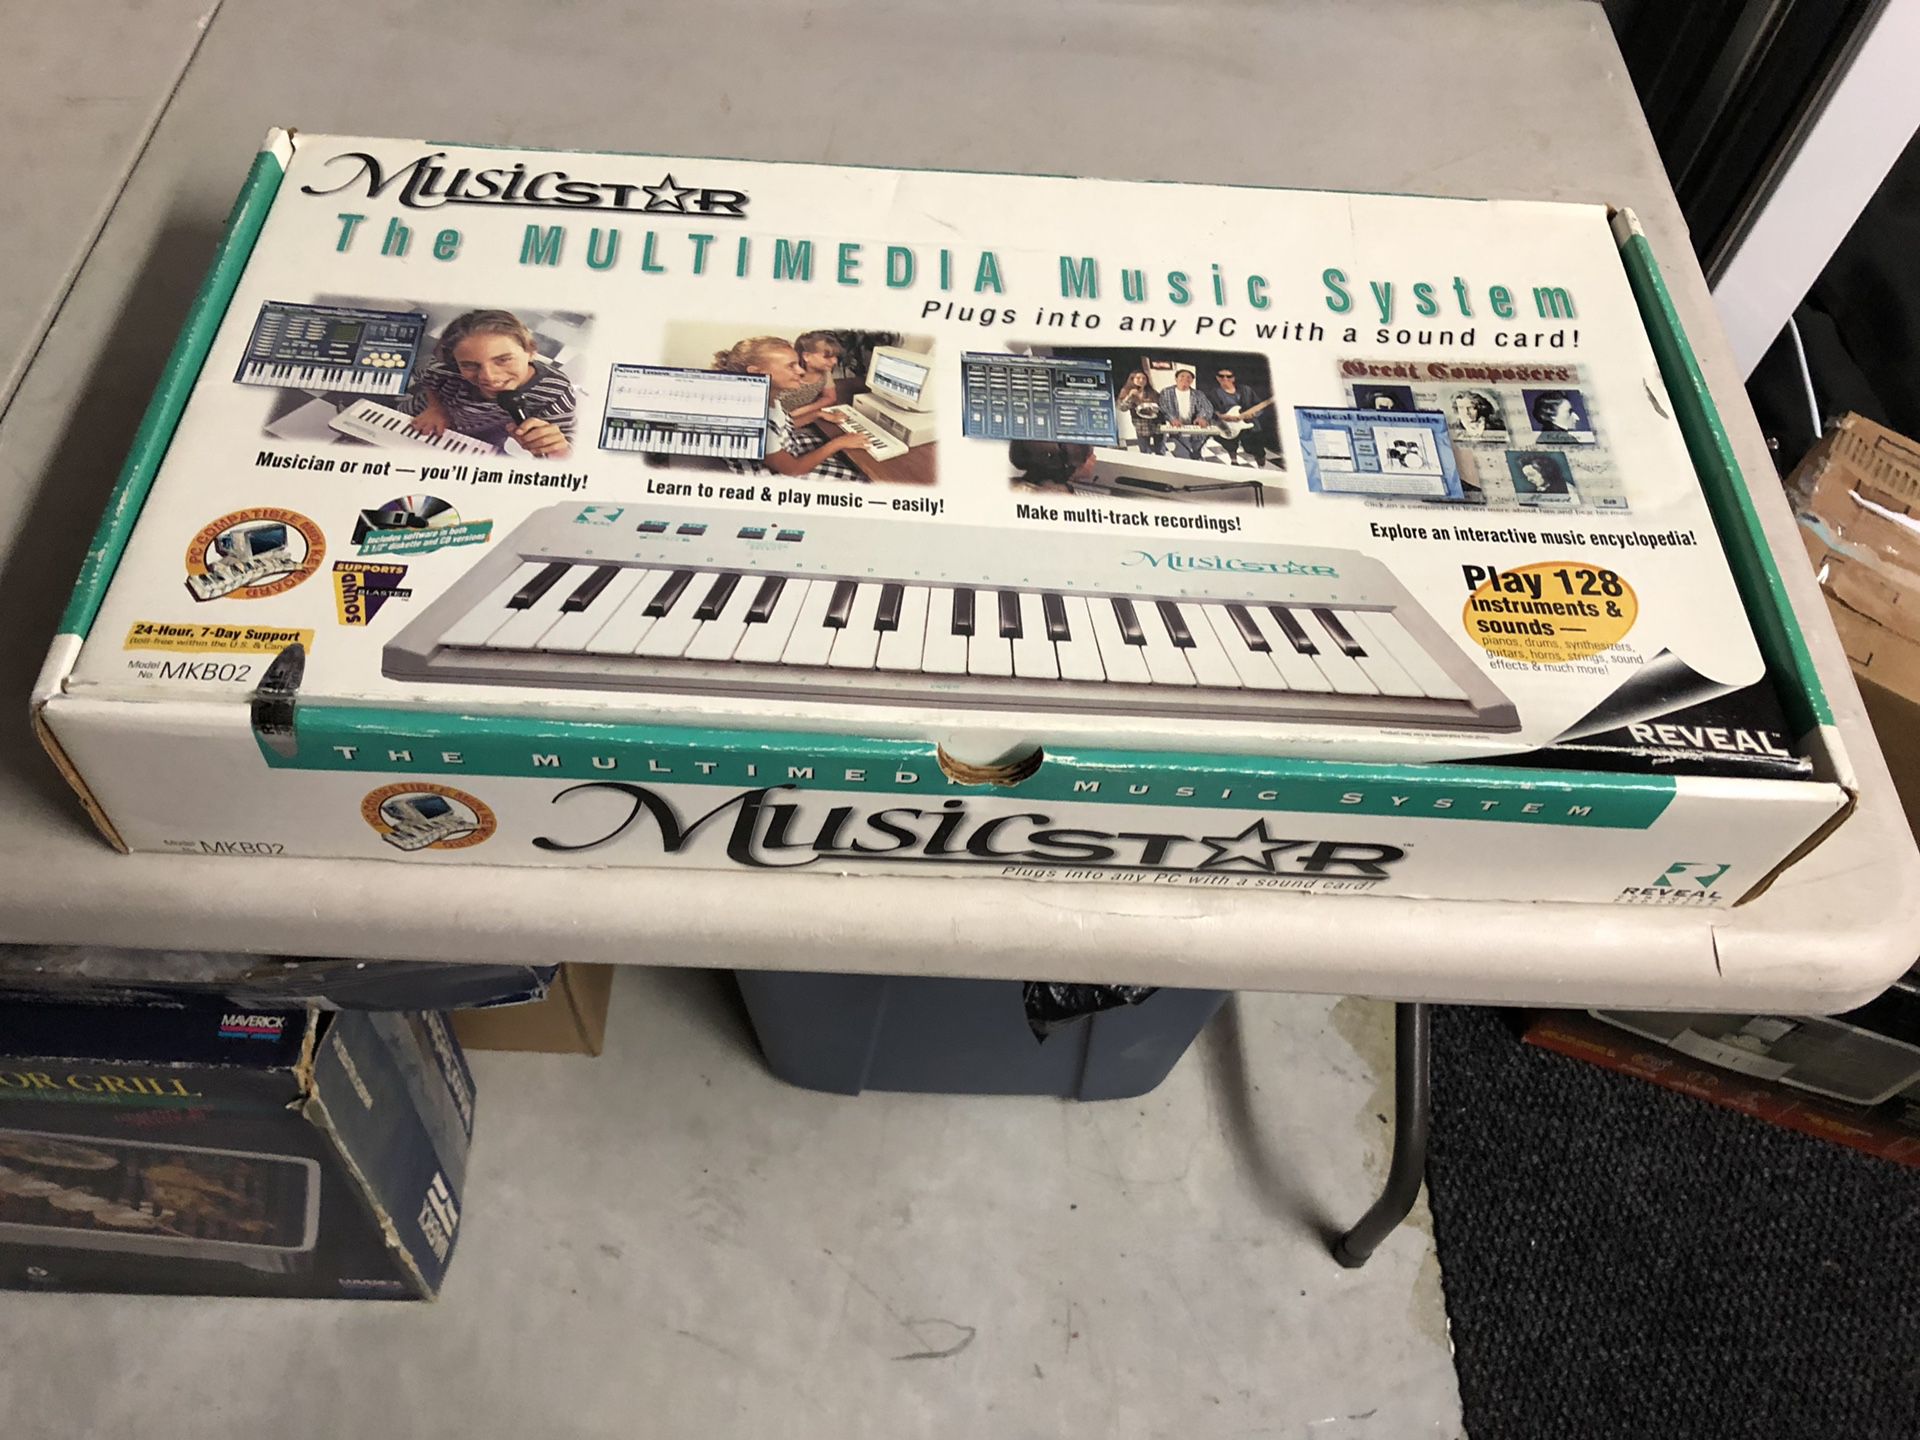 Reveal Musicstar MKB02 Multimedia Music System Midi Keyboard In Original Box!